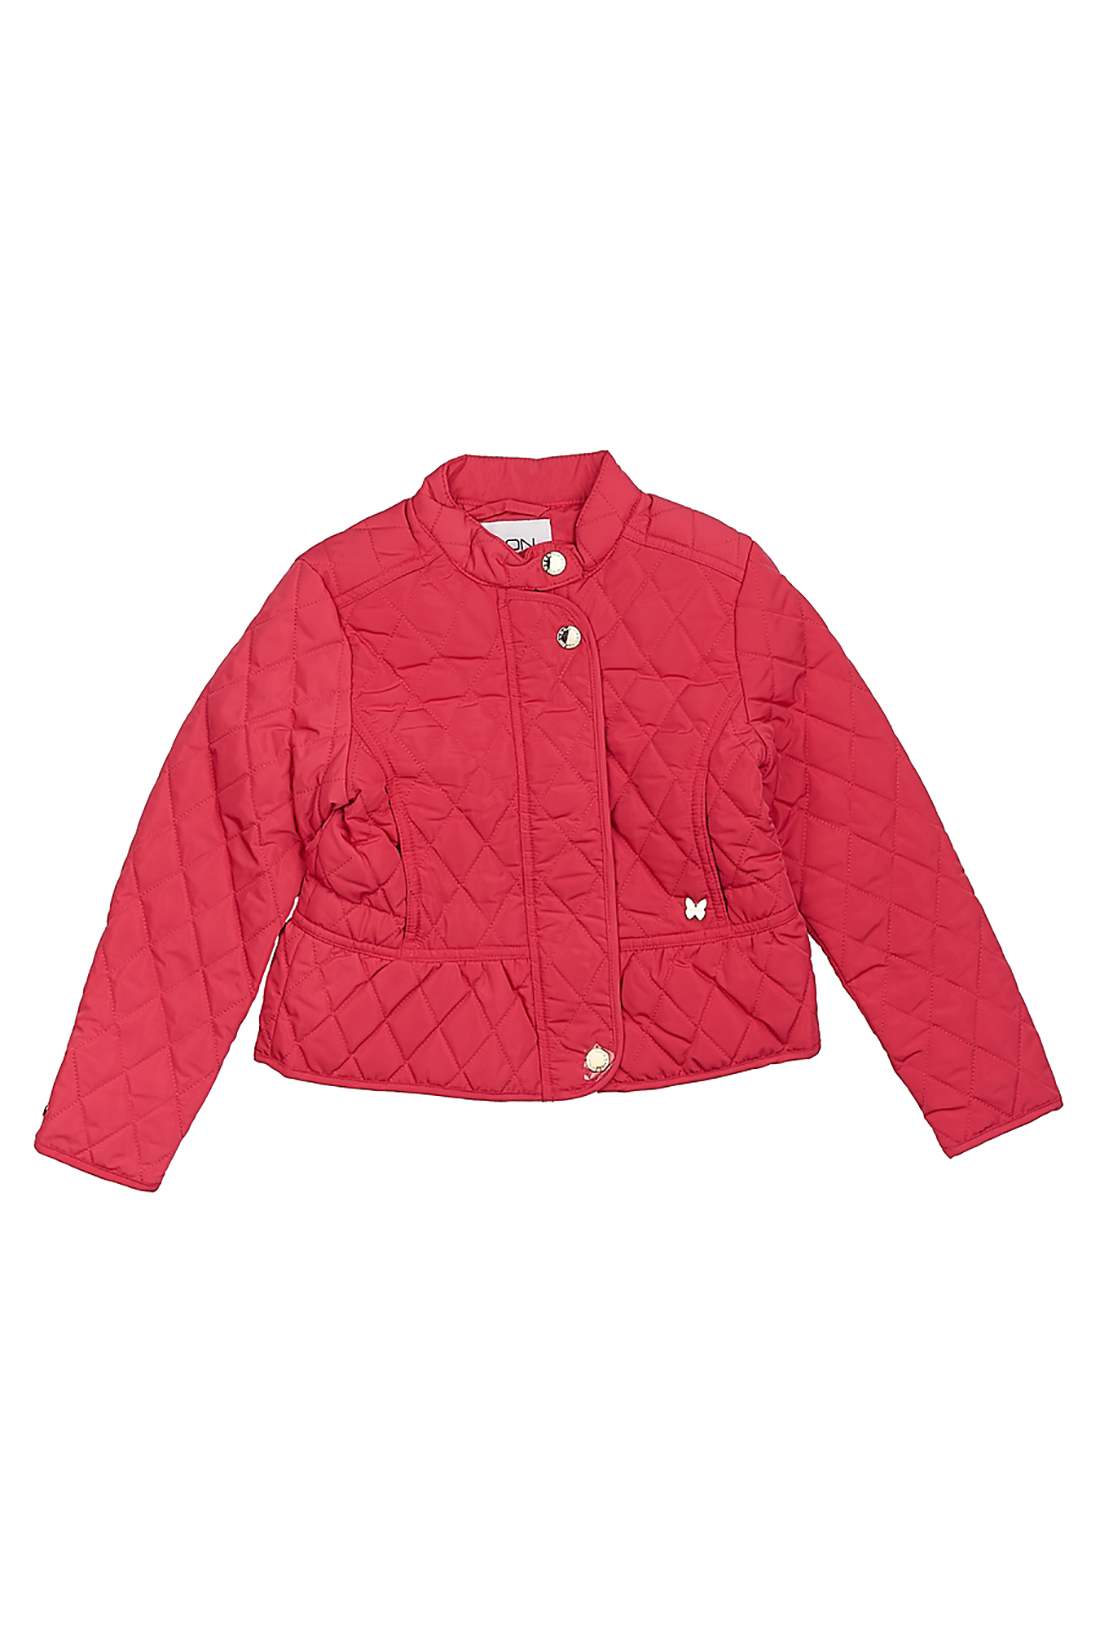 Куртка для девочки (арт. baon BK038004), размер 122-128, цвет розовый Куртка для девочки (арт. baon BK038004) - фото 5